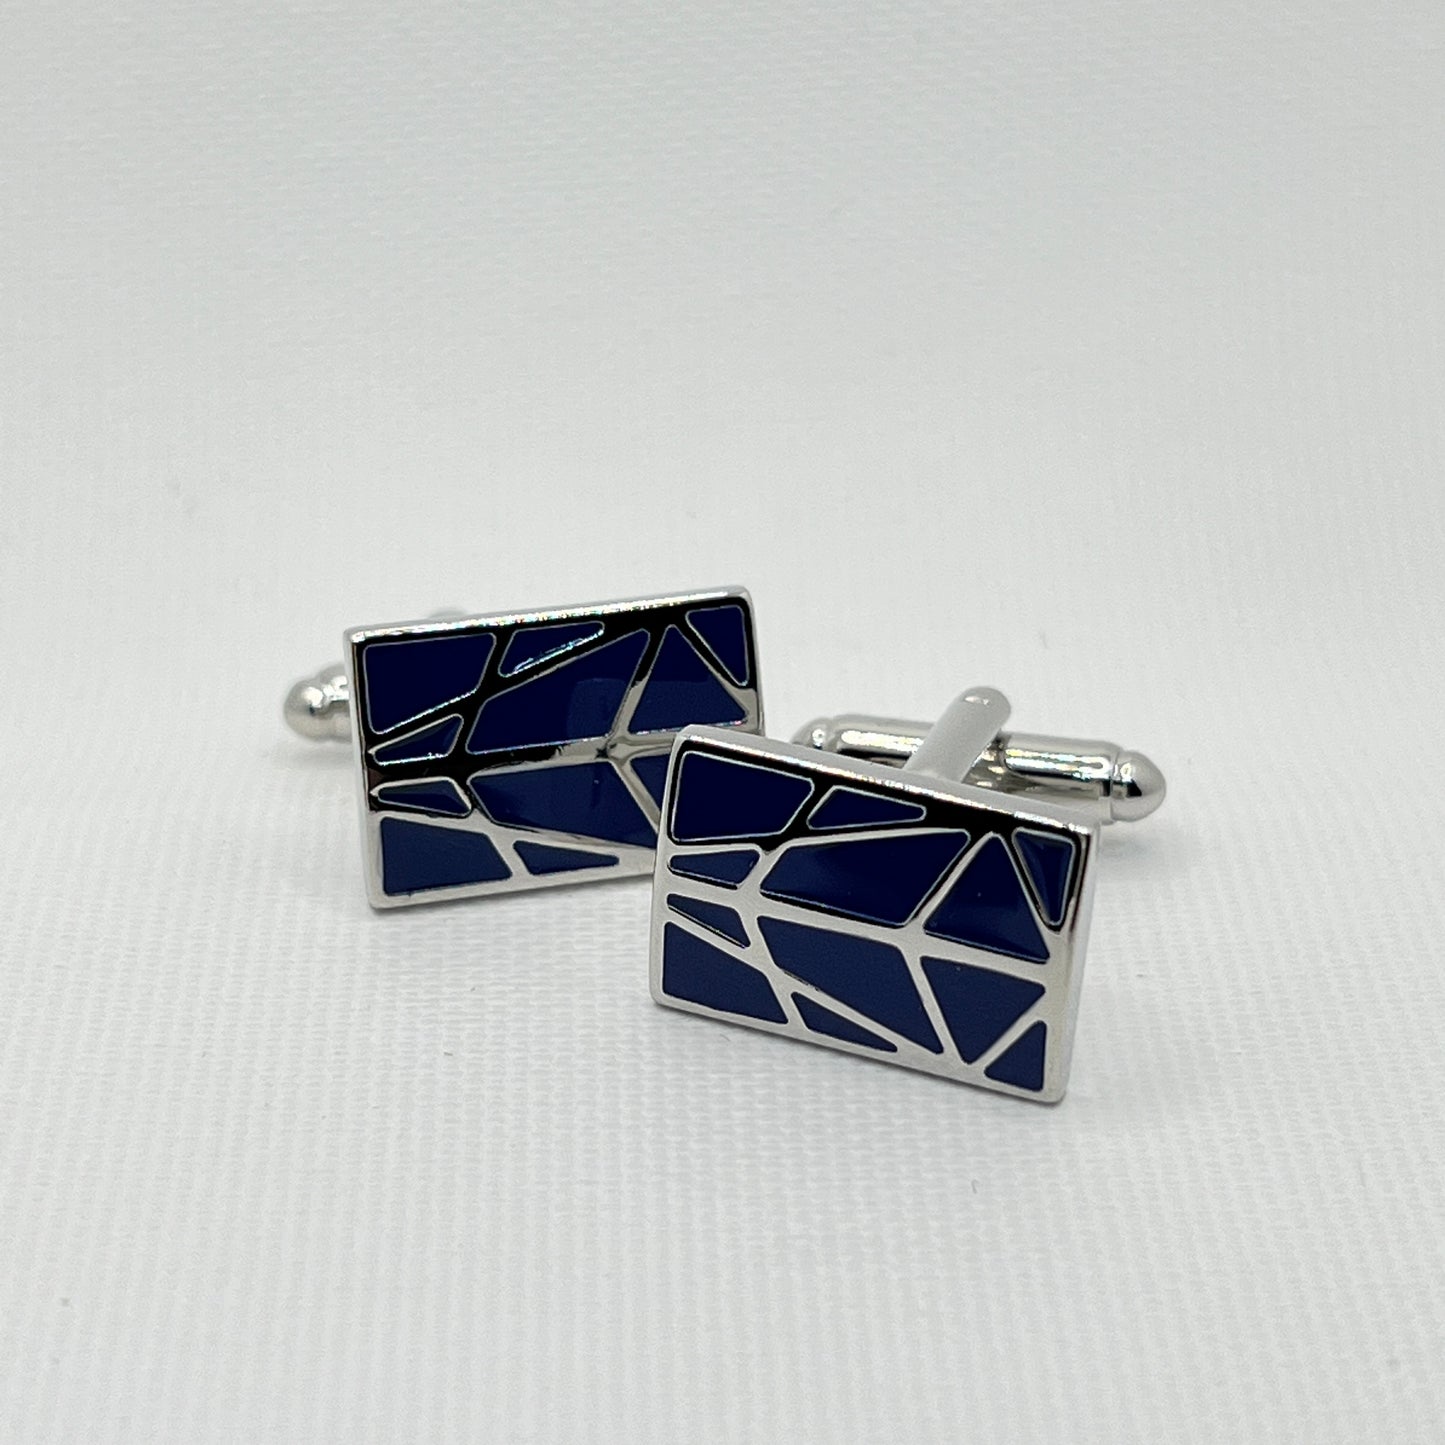 Tasker & Shaw | Luxury Menswear | Silver cufflinks with blue and silver asymmetric pattern